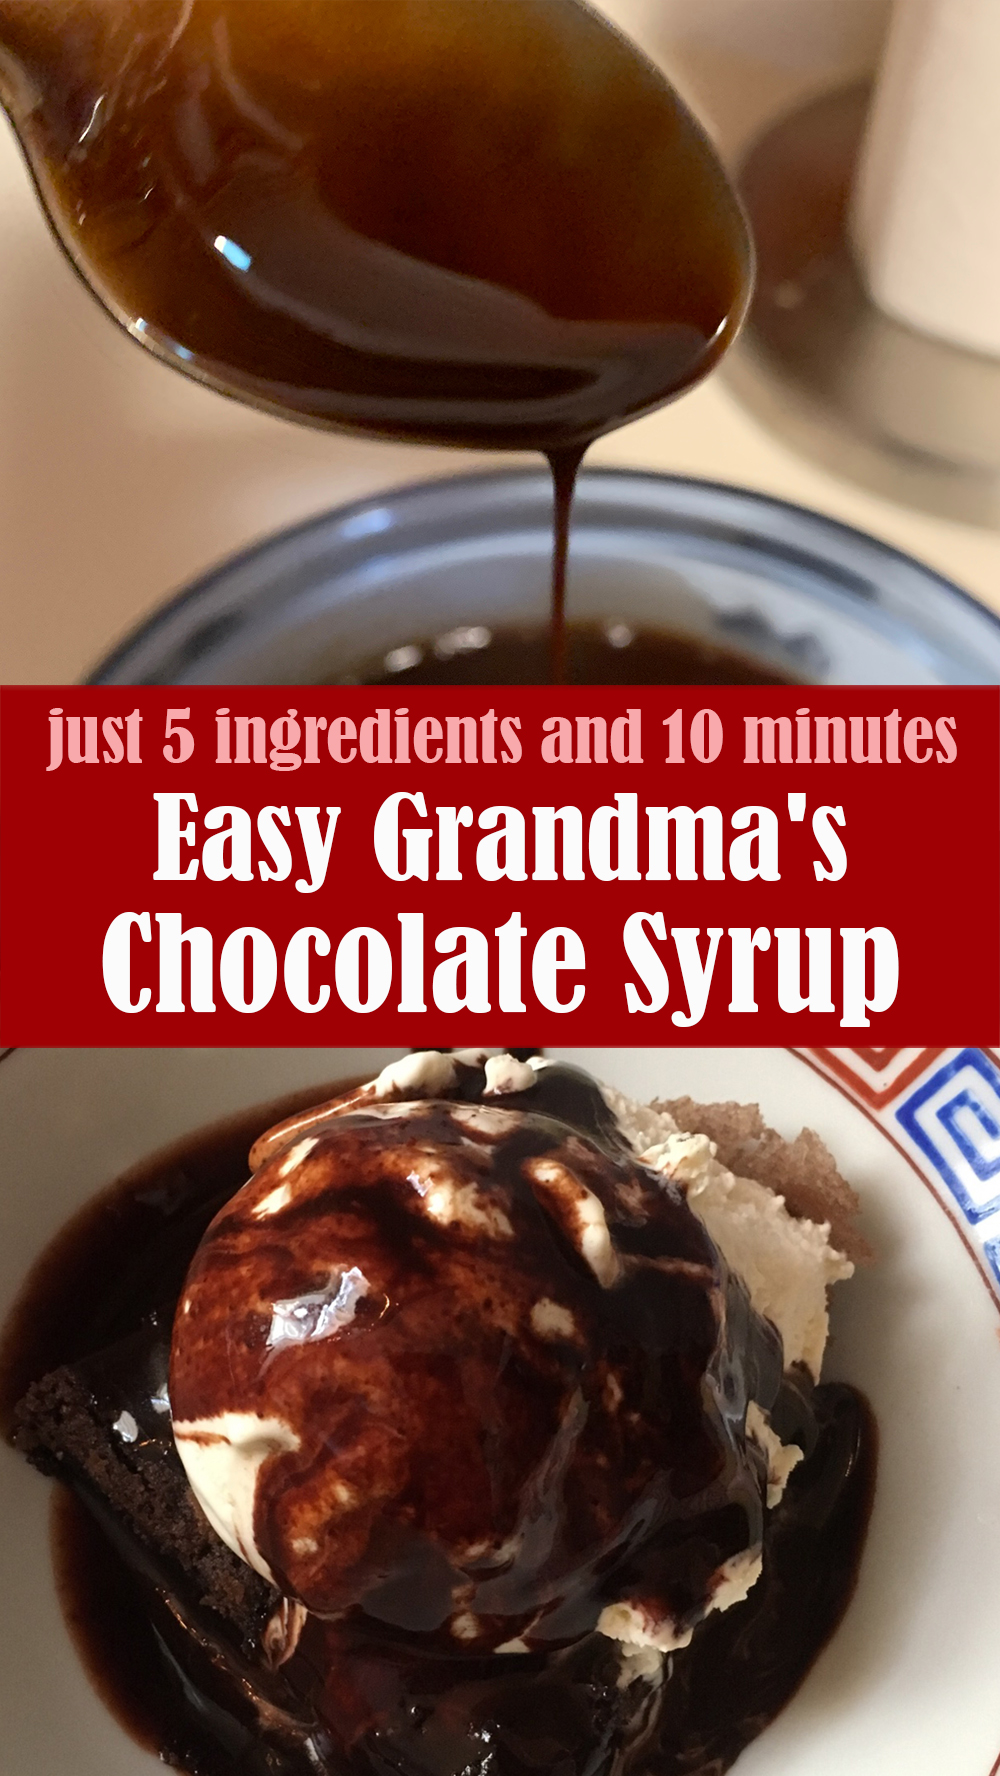 Easy Grandma's Chocolate Syrup Recipe